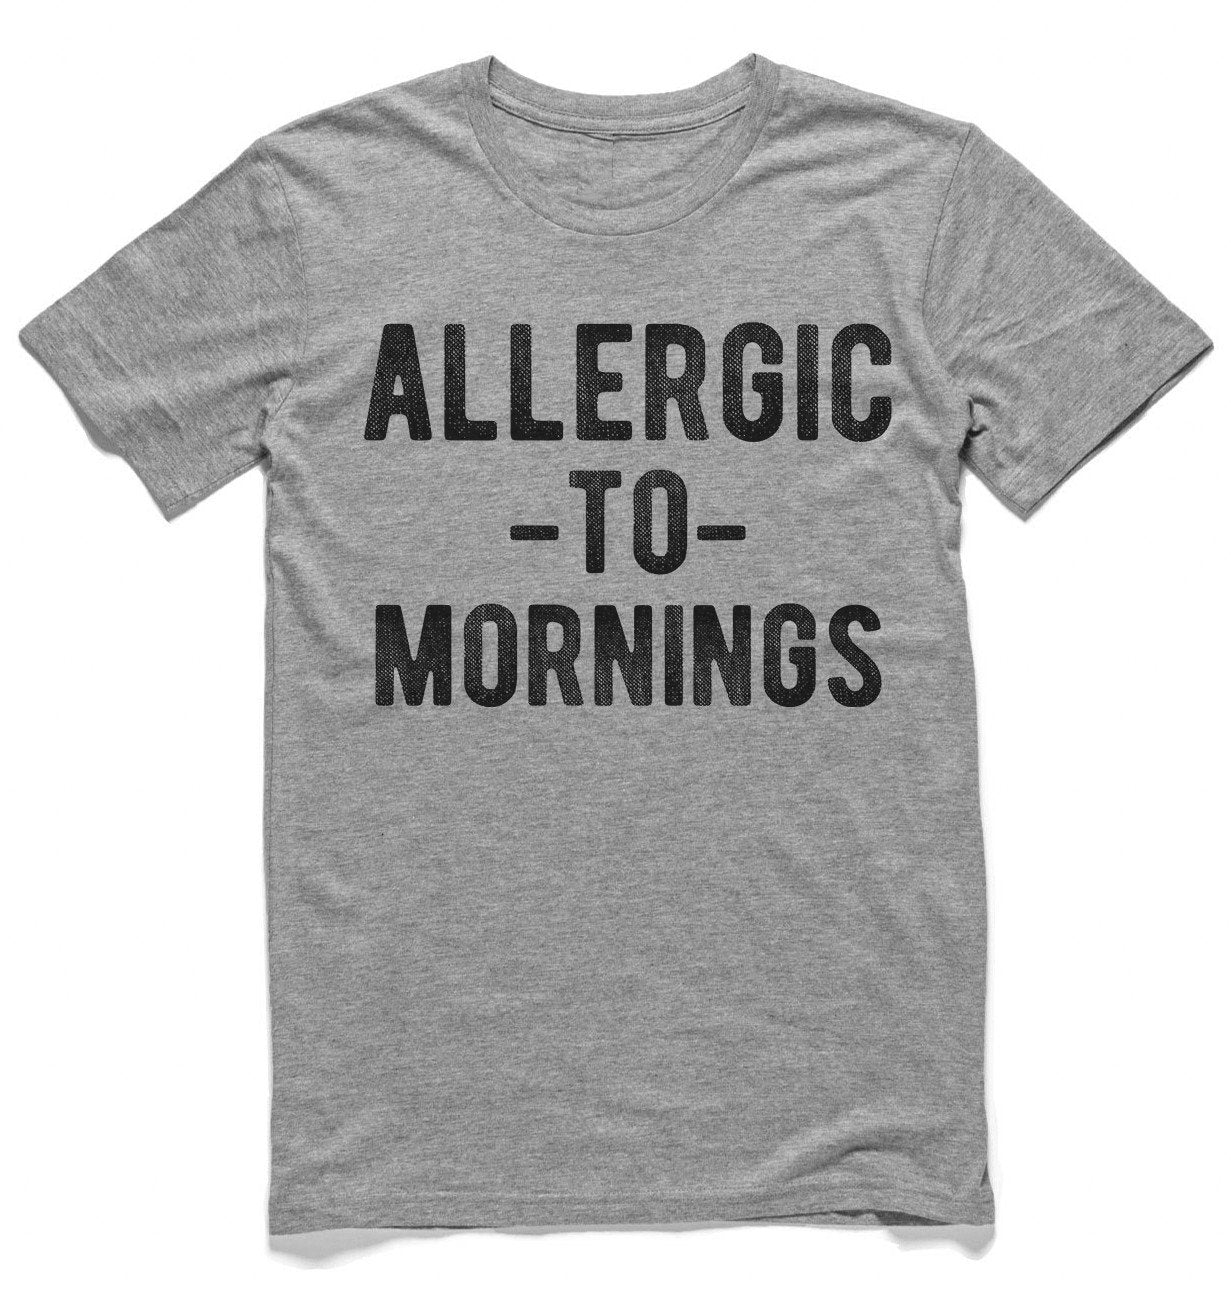 allergic -to- mornings t-shirt - Shirtoopia